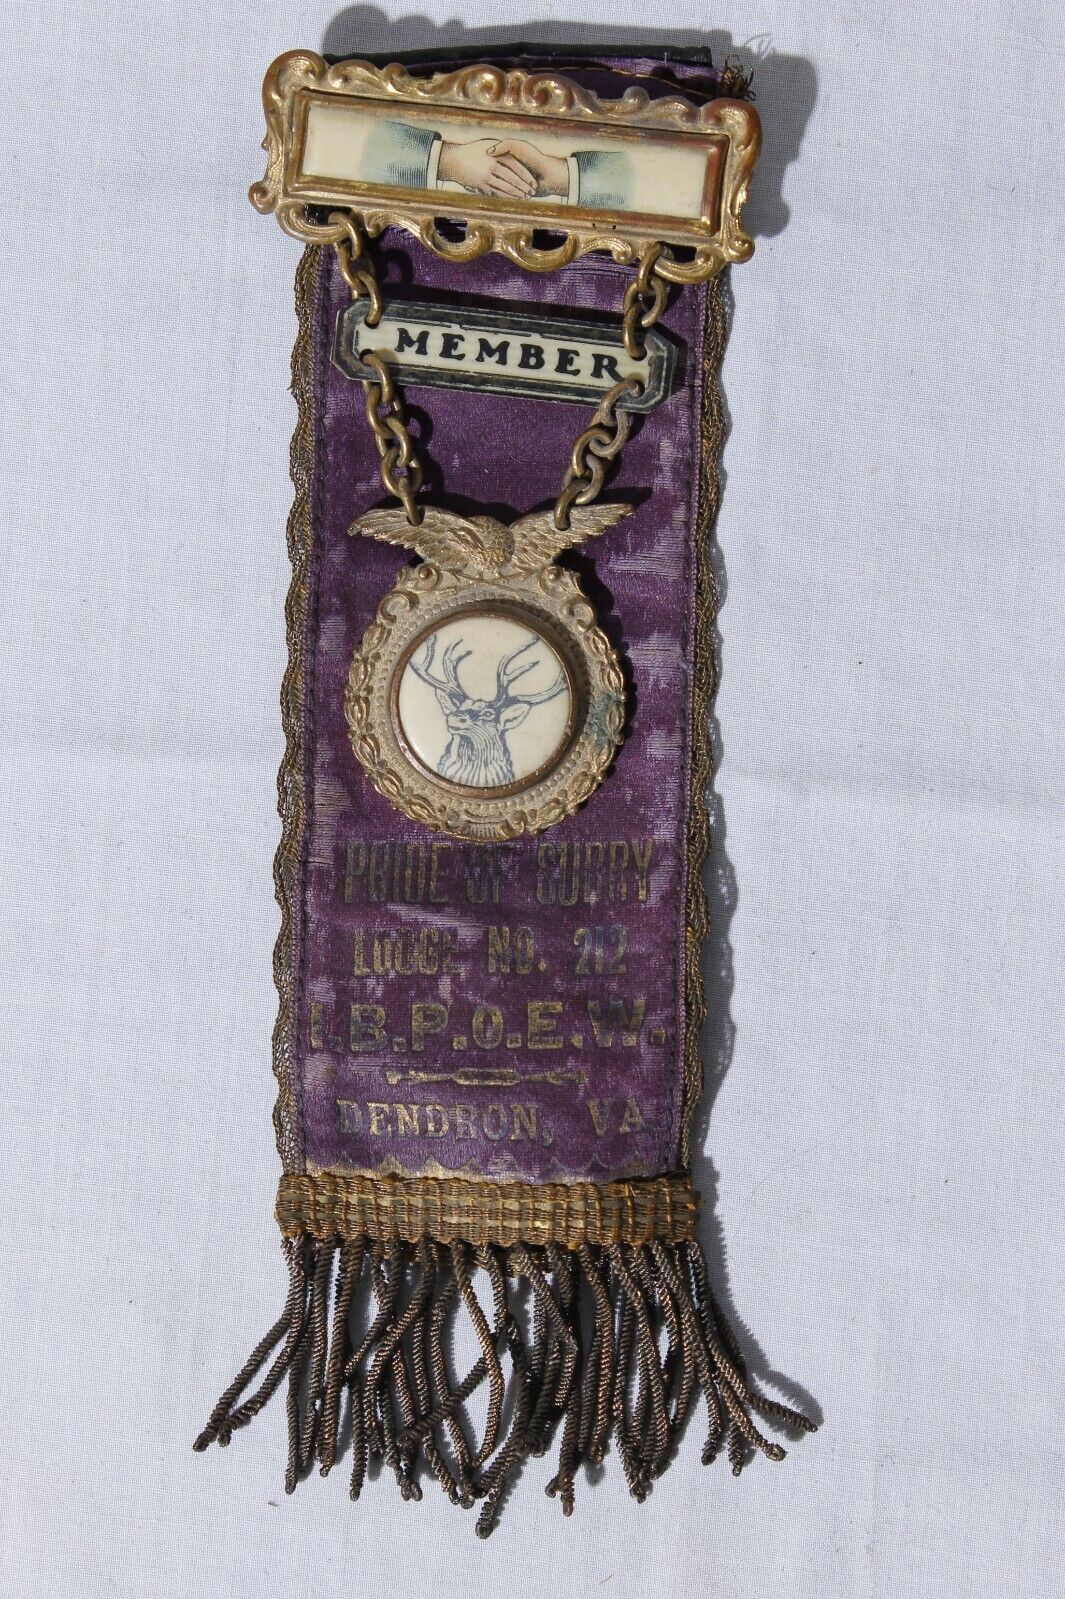 Antique I.B.P.O.E.W. Pride of Surry Lodge Fraternal Member Pin